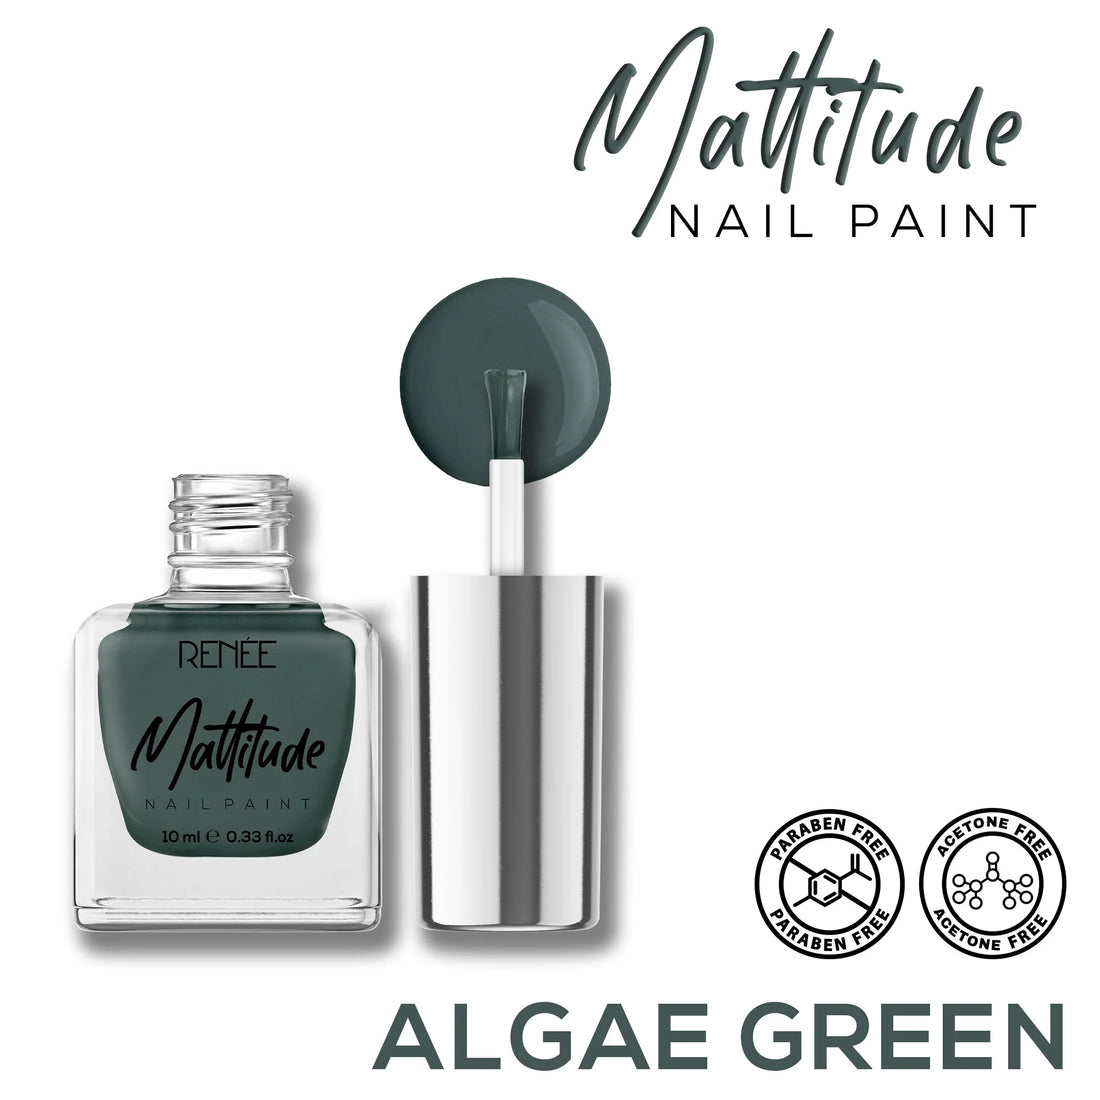 RENEE Mattitude Nail Paint 10ml Algae Green